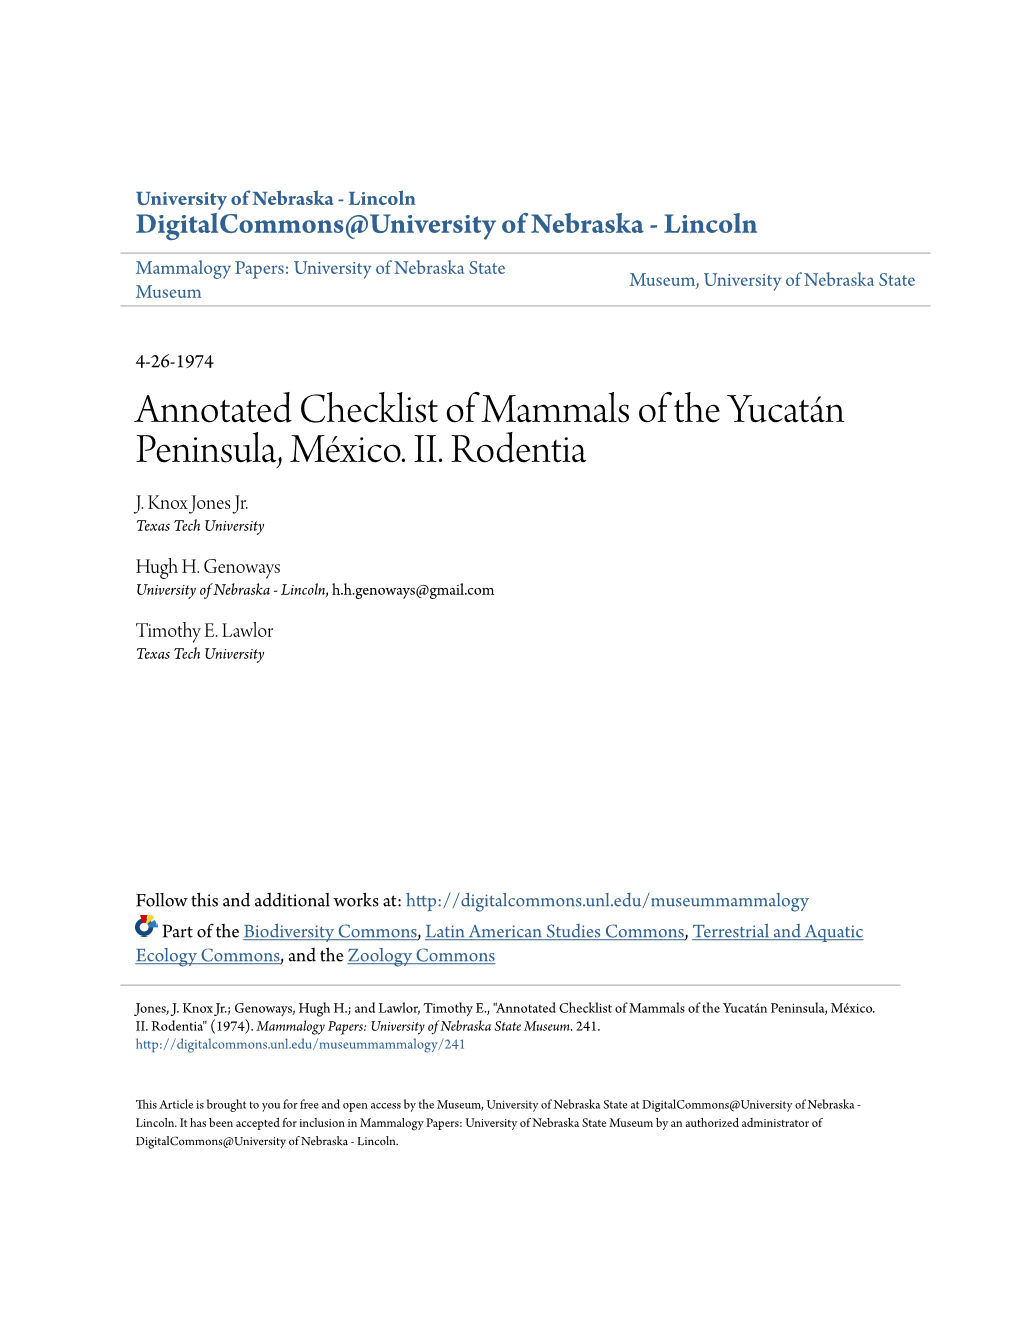 Annotated Checklist of Mammals of the Yucatán Peninsula, México. II